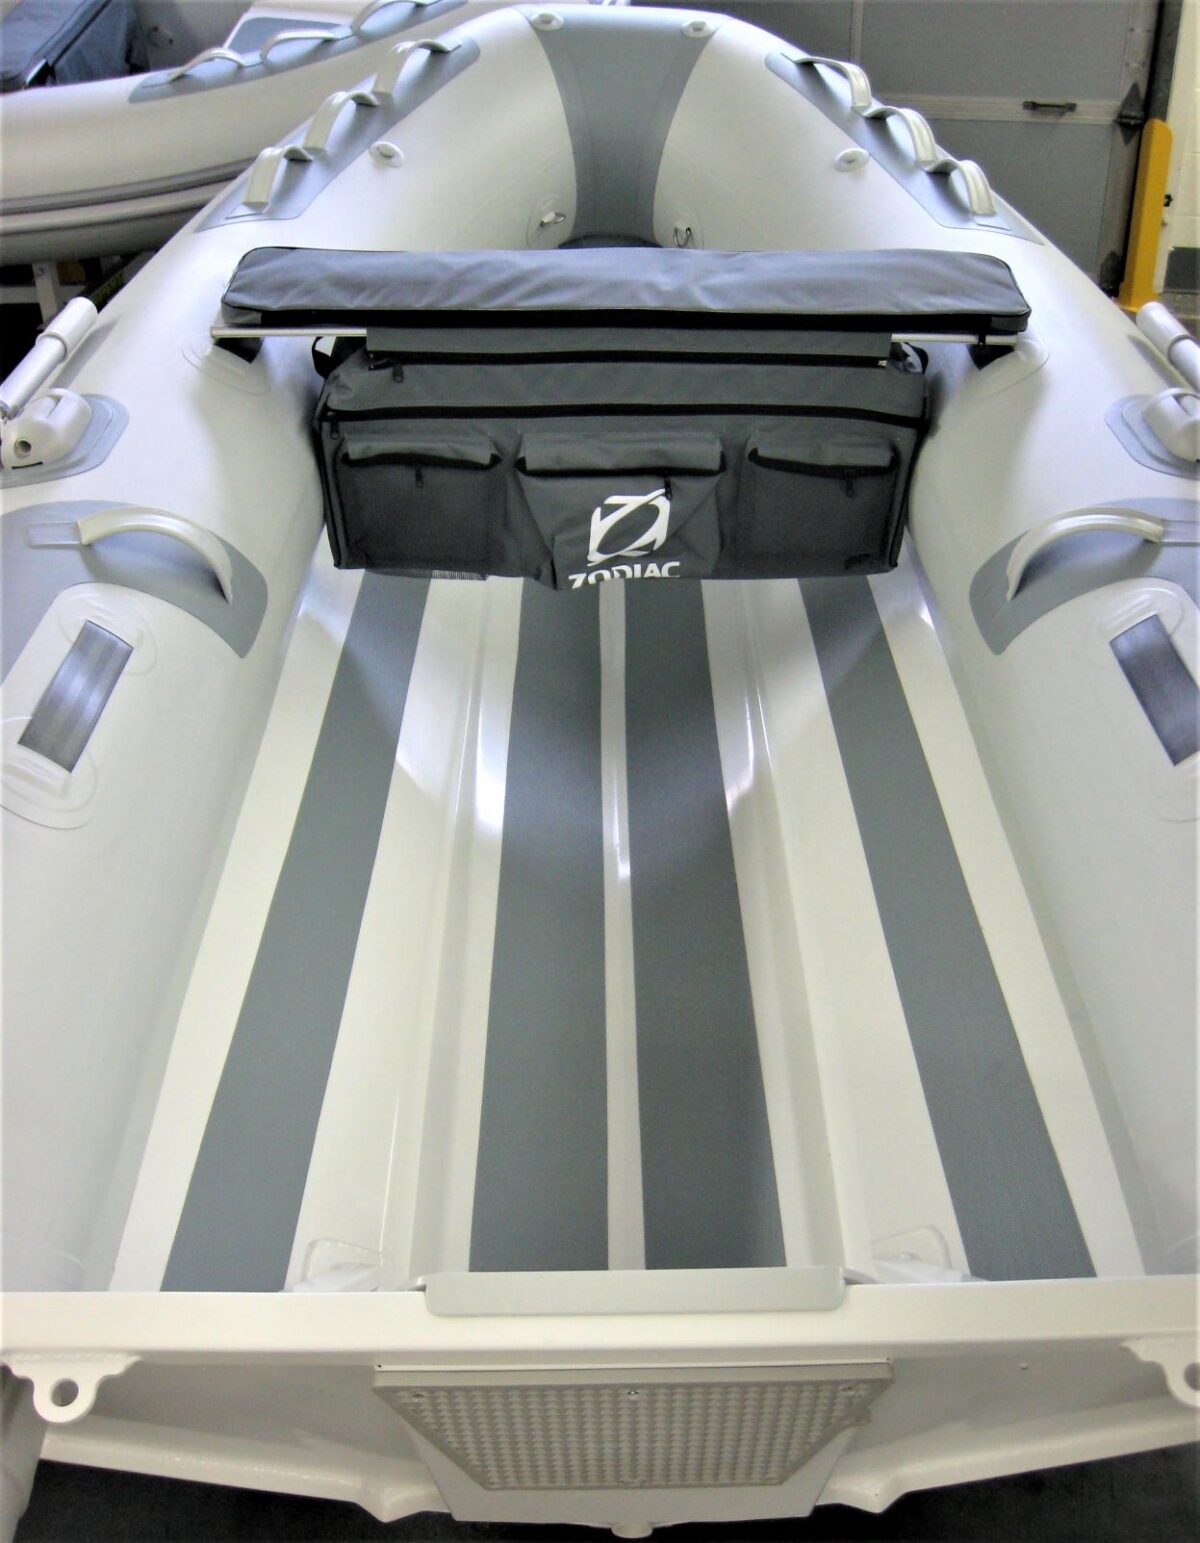 Zodiac Cadet RIB Aluminum inner hull and bench seat with bag